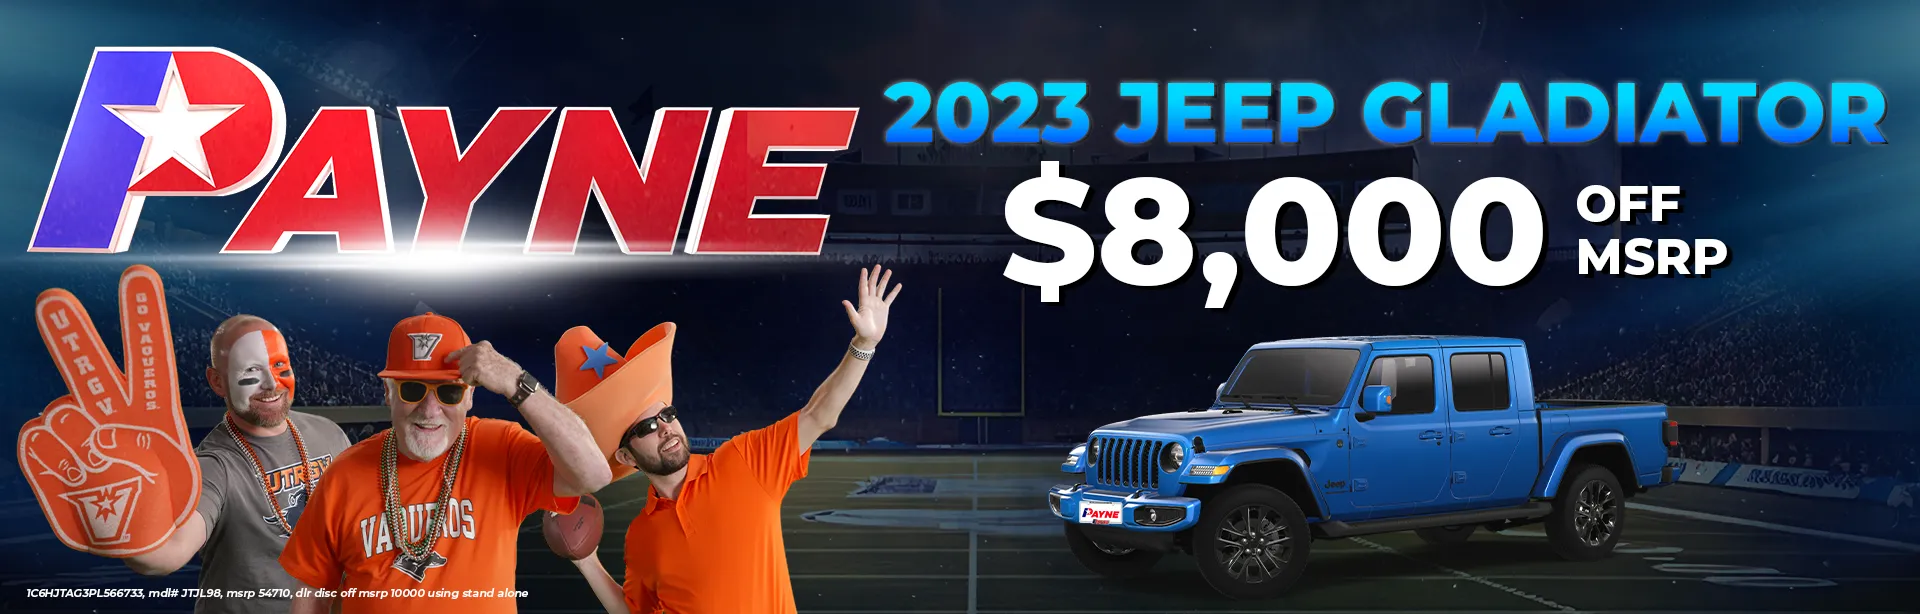 $8,000 off MSRP on 2023 Jeep Gladiator